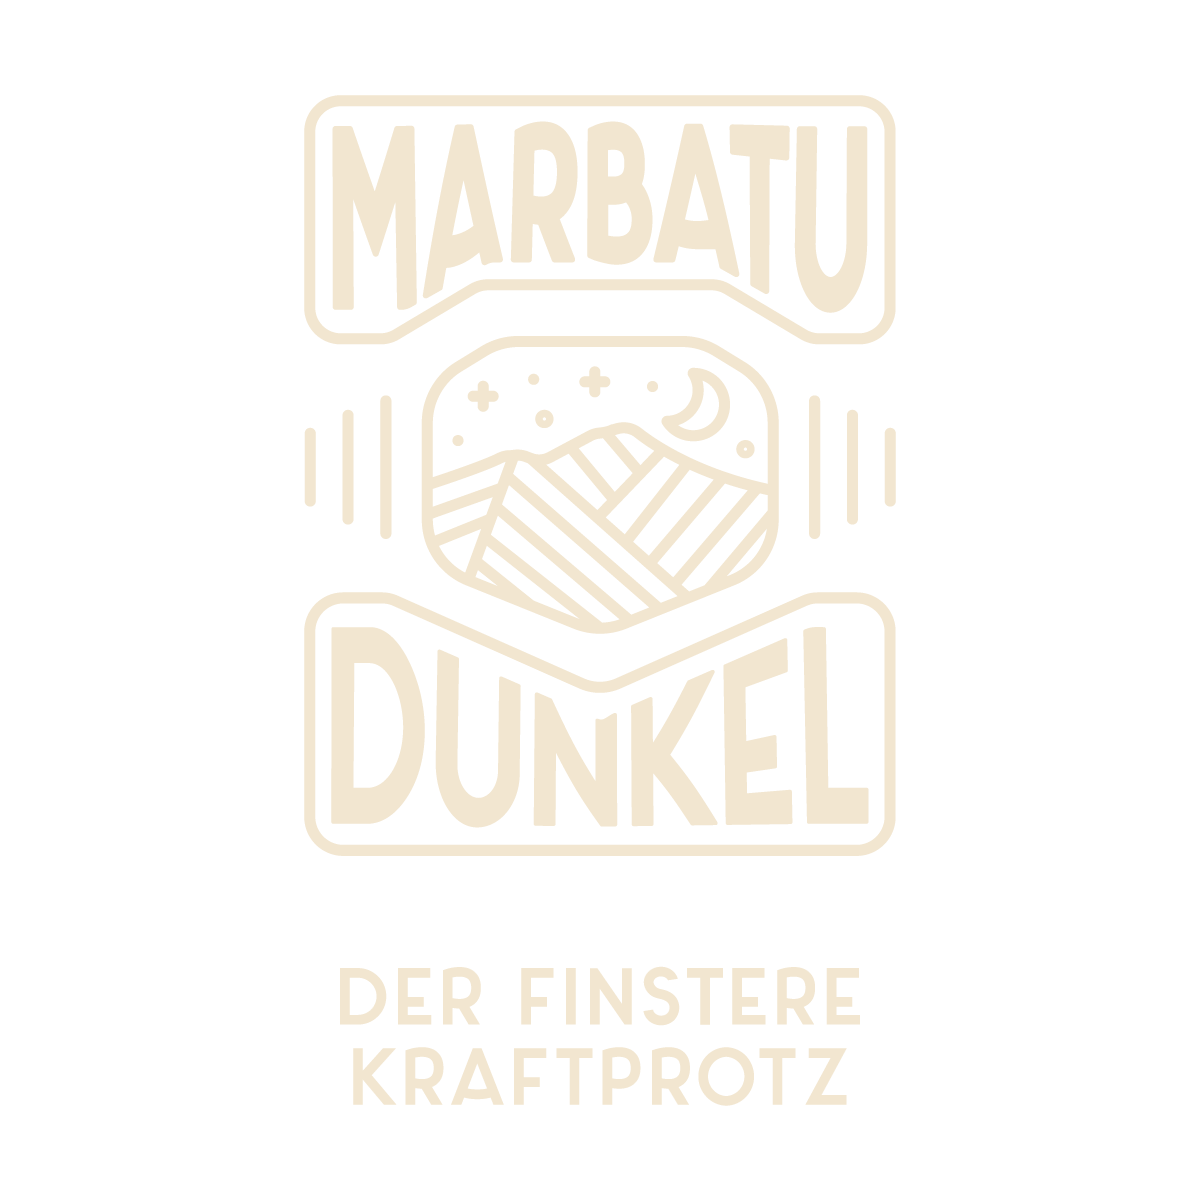 Marbatu Dunkel Logo - Der finstere Kraftprotz